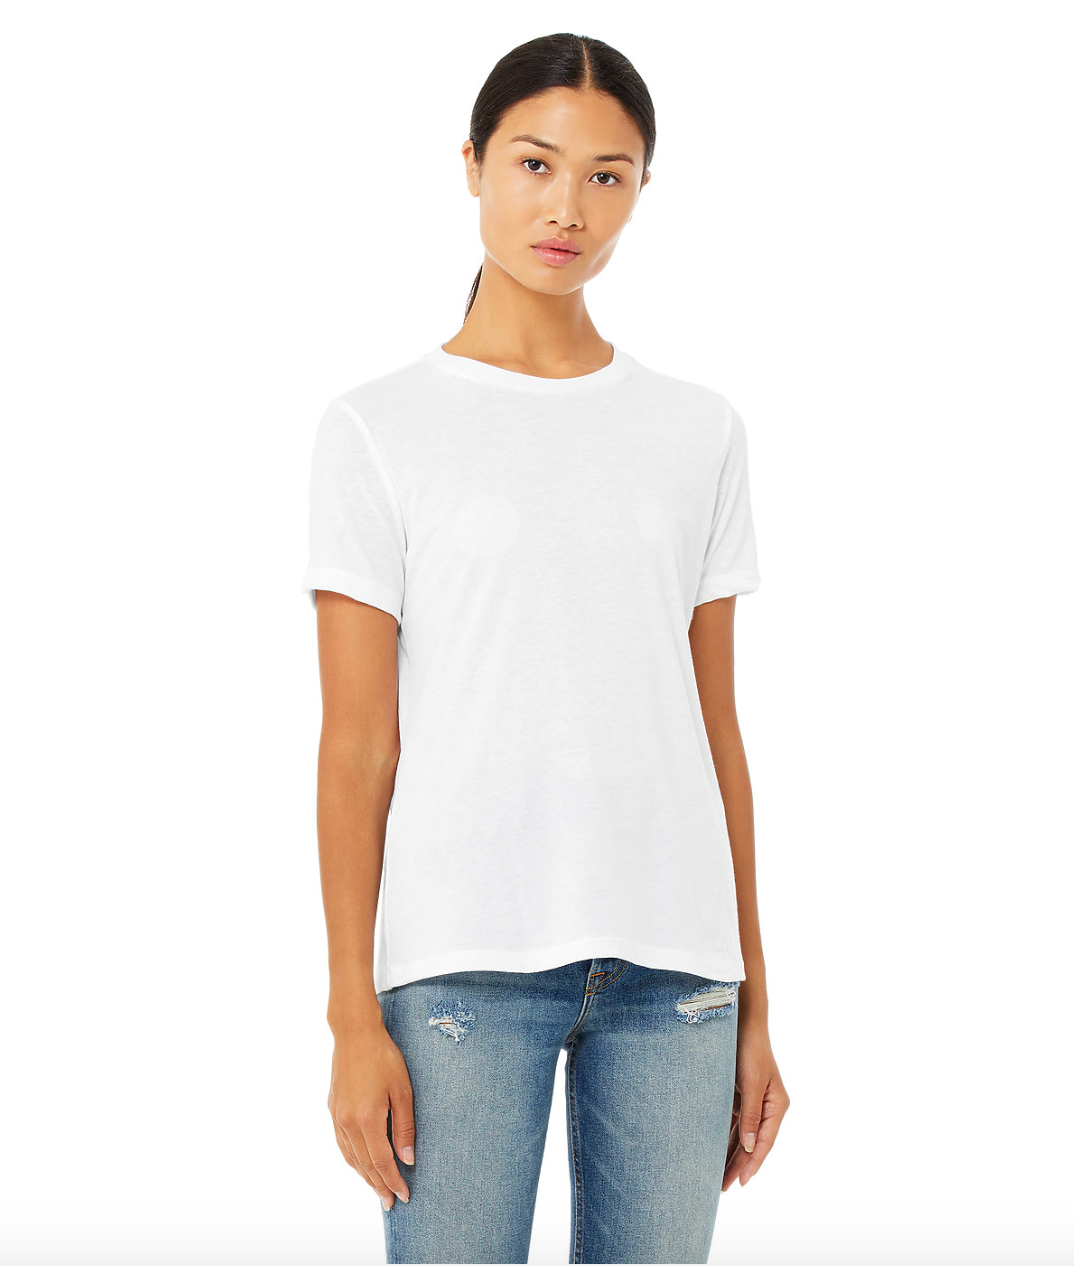 P A L A I S, Bella + Canvas Women's Relaxed Tri-Blend T-Shirt 6413